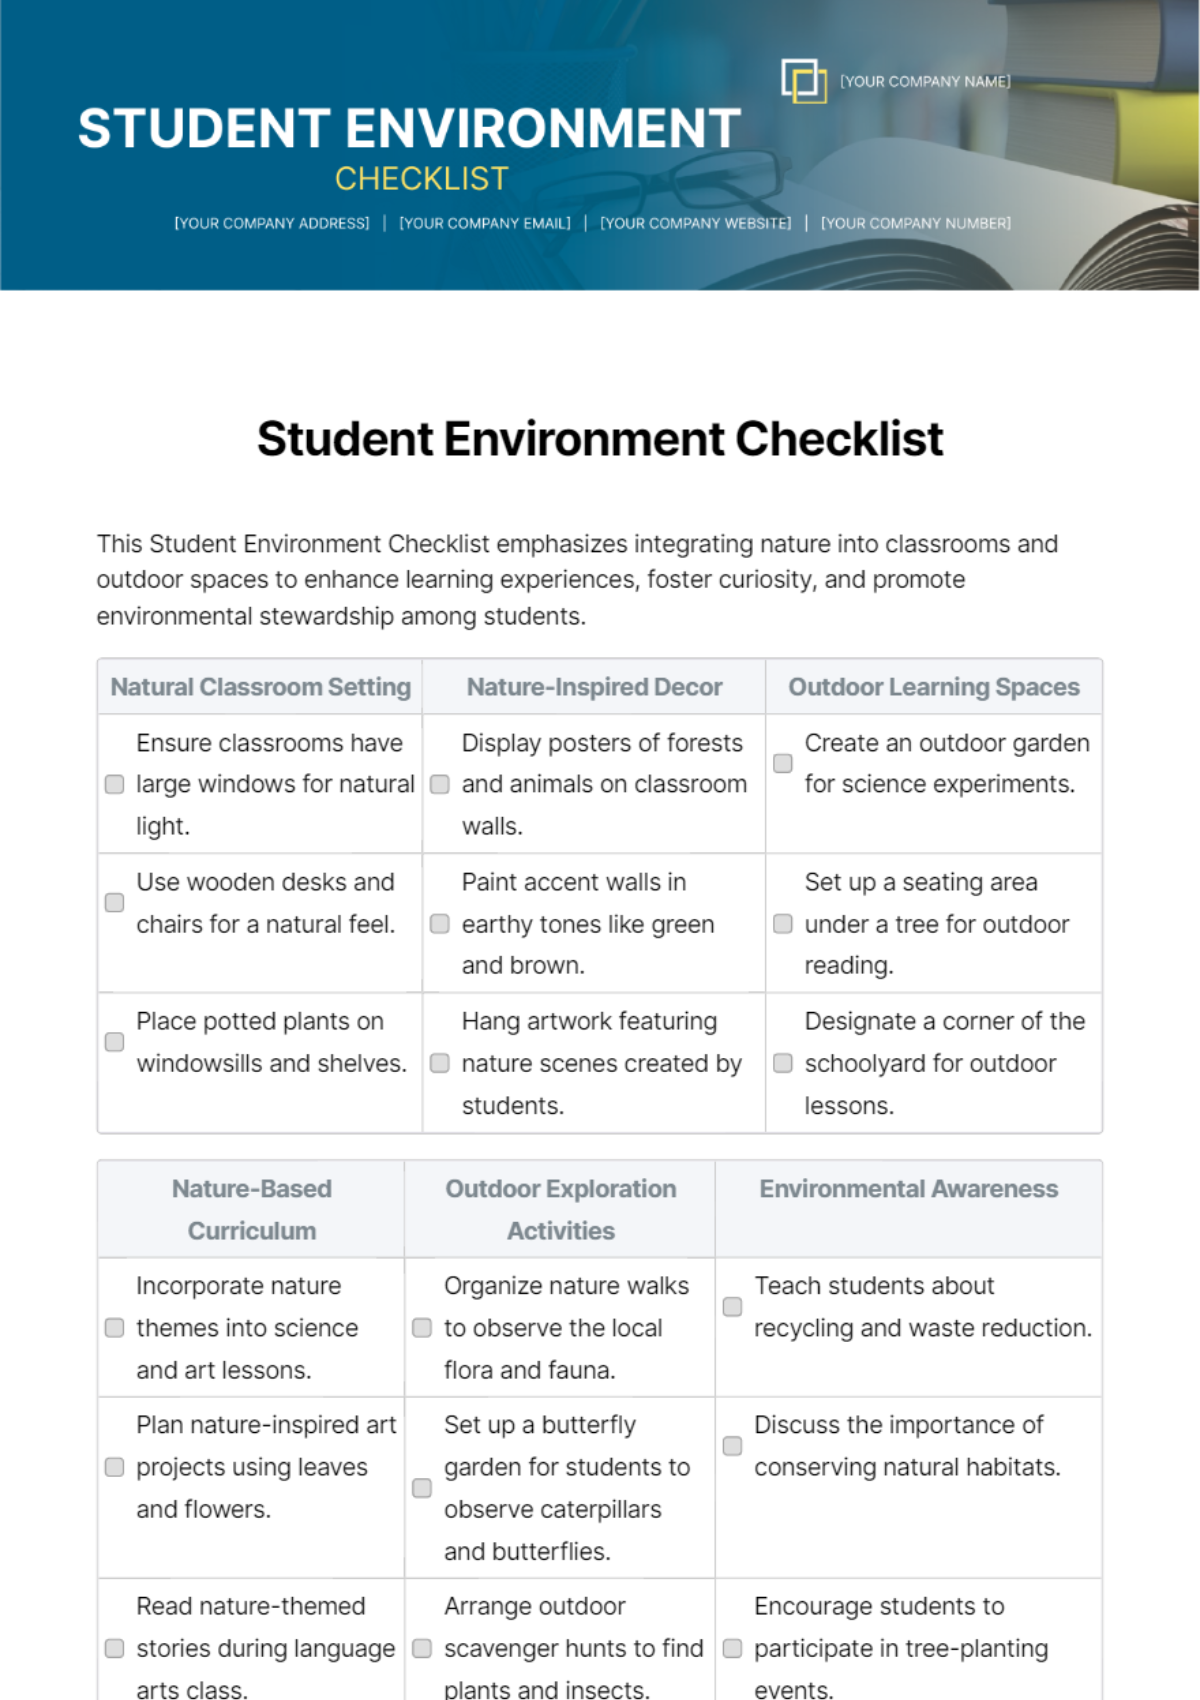 Student Environment Checklist Template